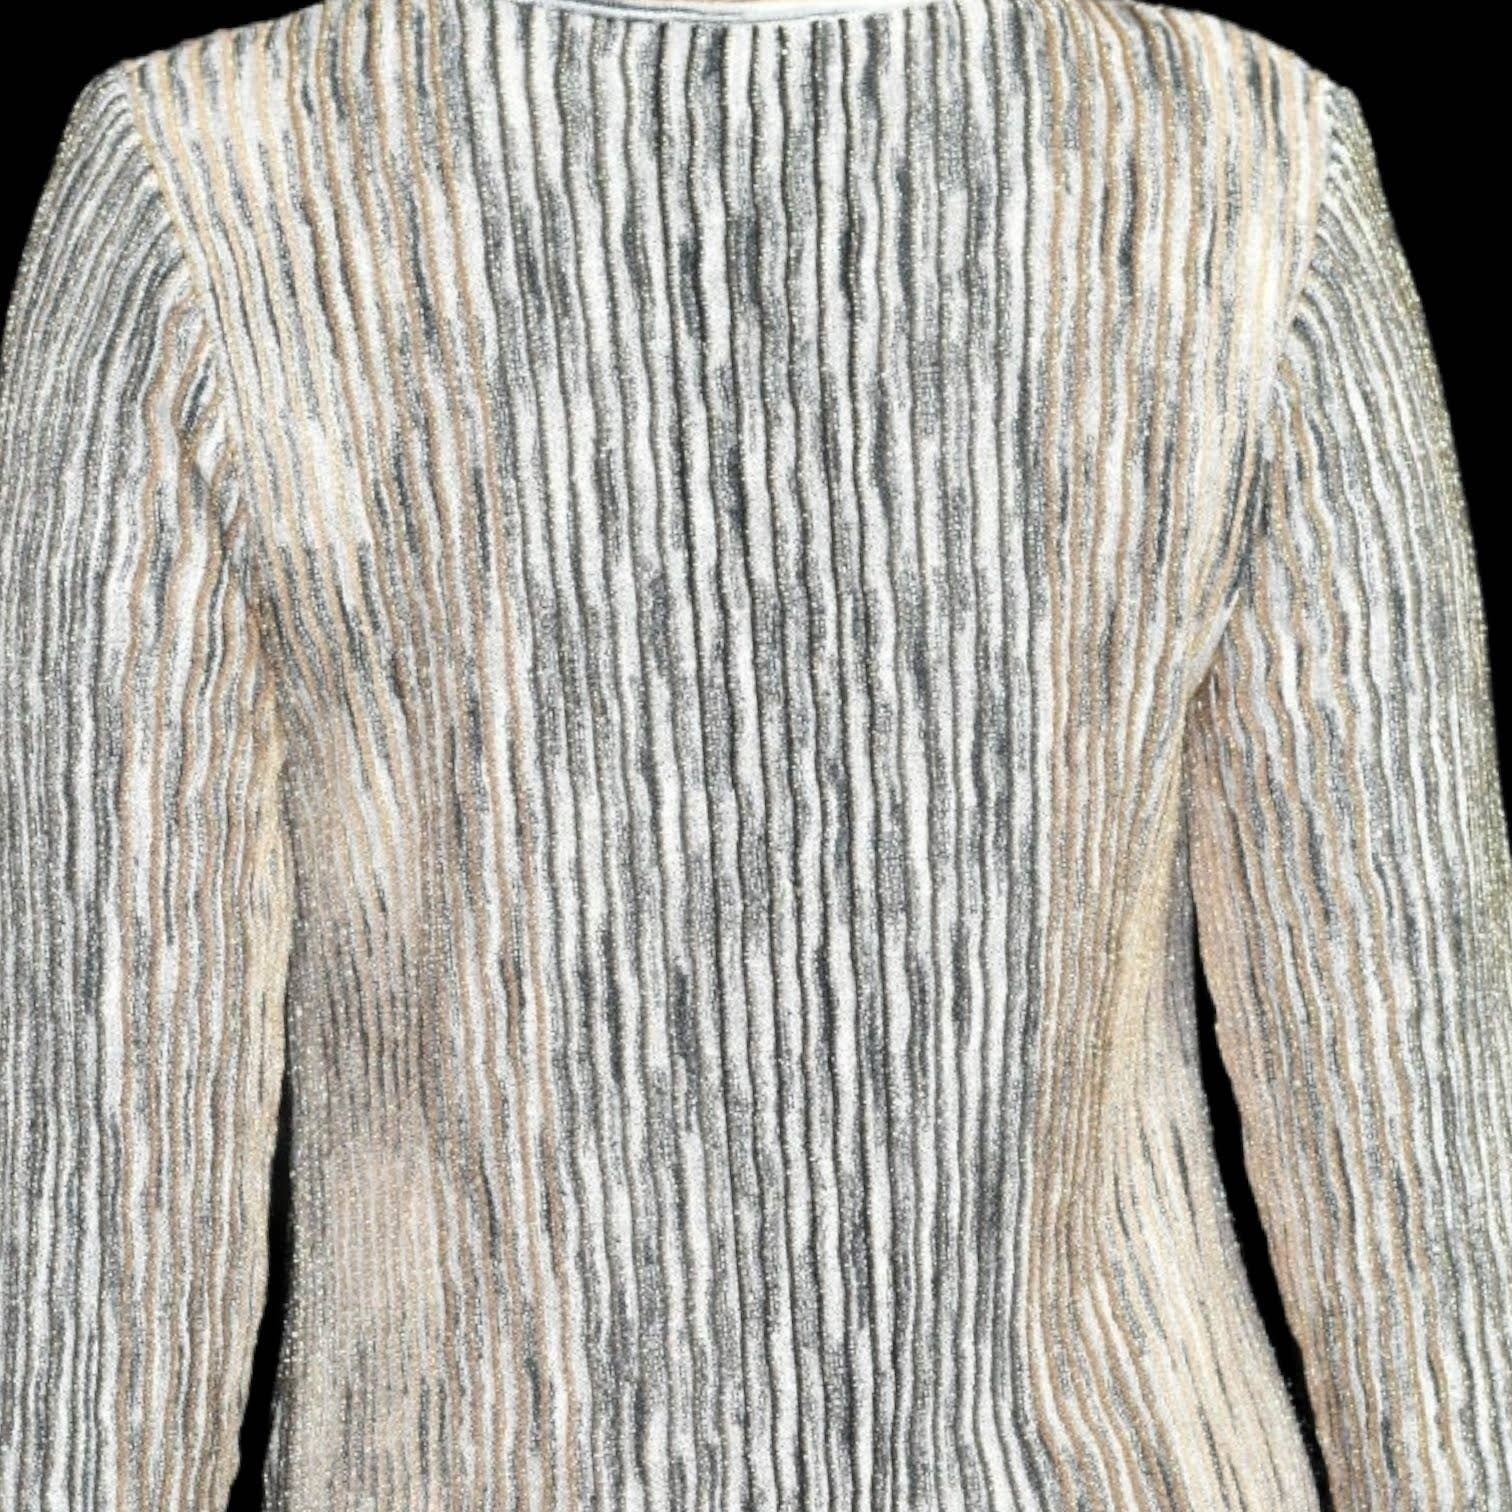 Calypso St Barth Maviale Tunic Top Gold Lace Up Sweater Beaded Tassel Size Small